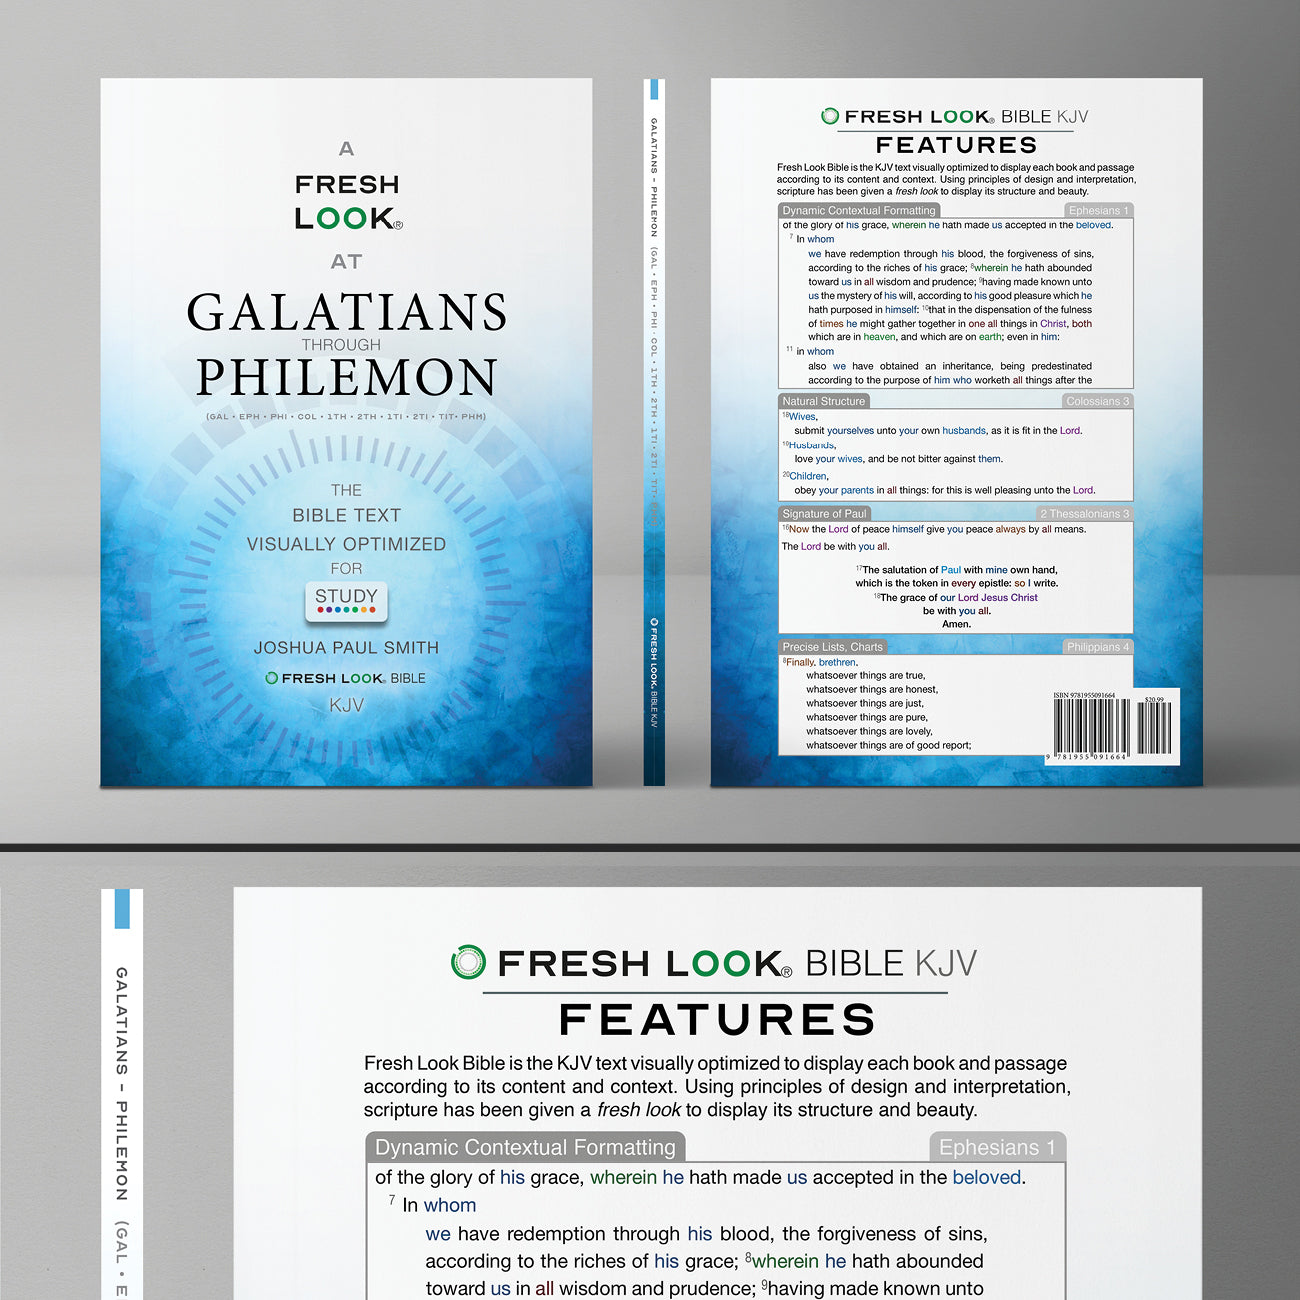 Galatians - Philemon Book (Study)